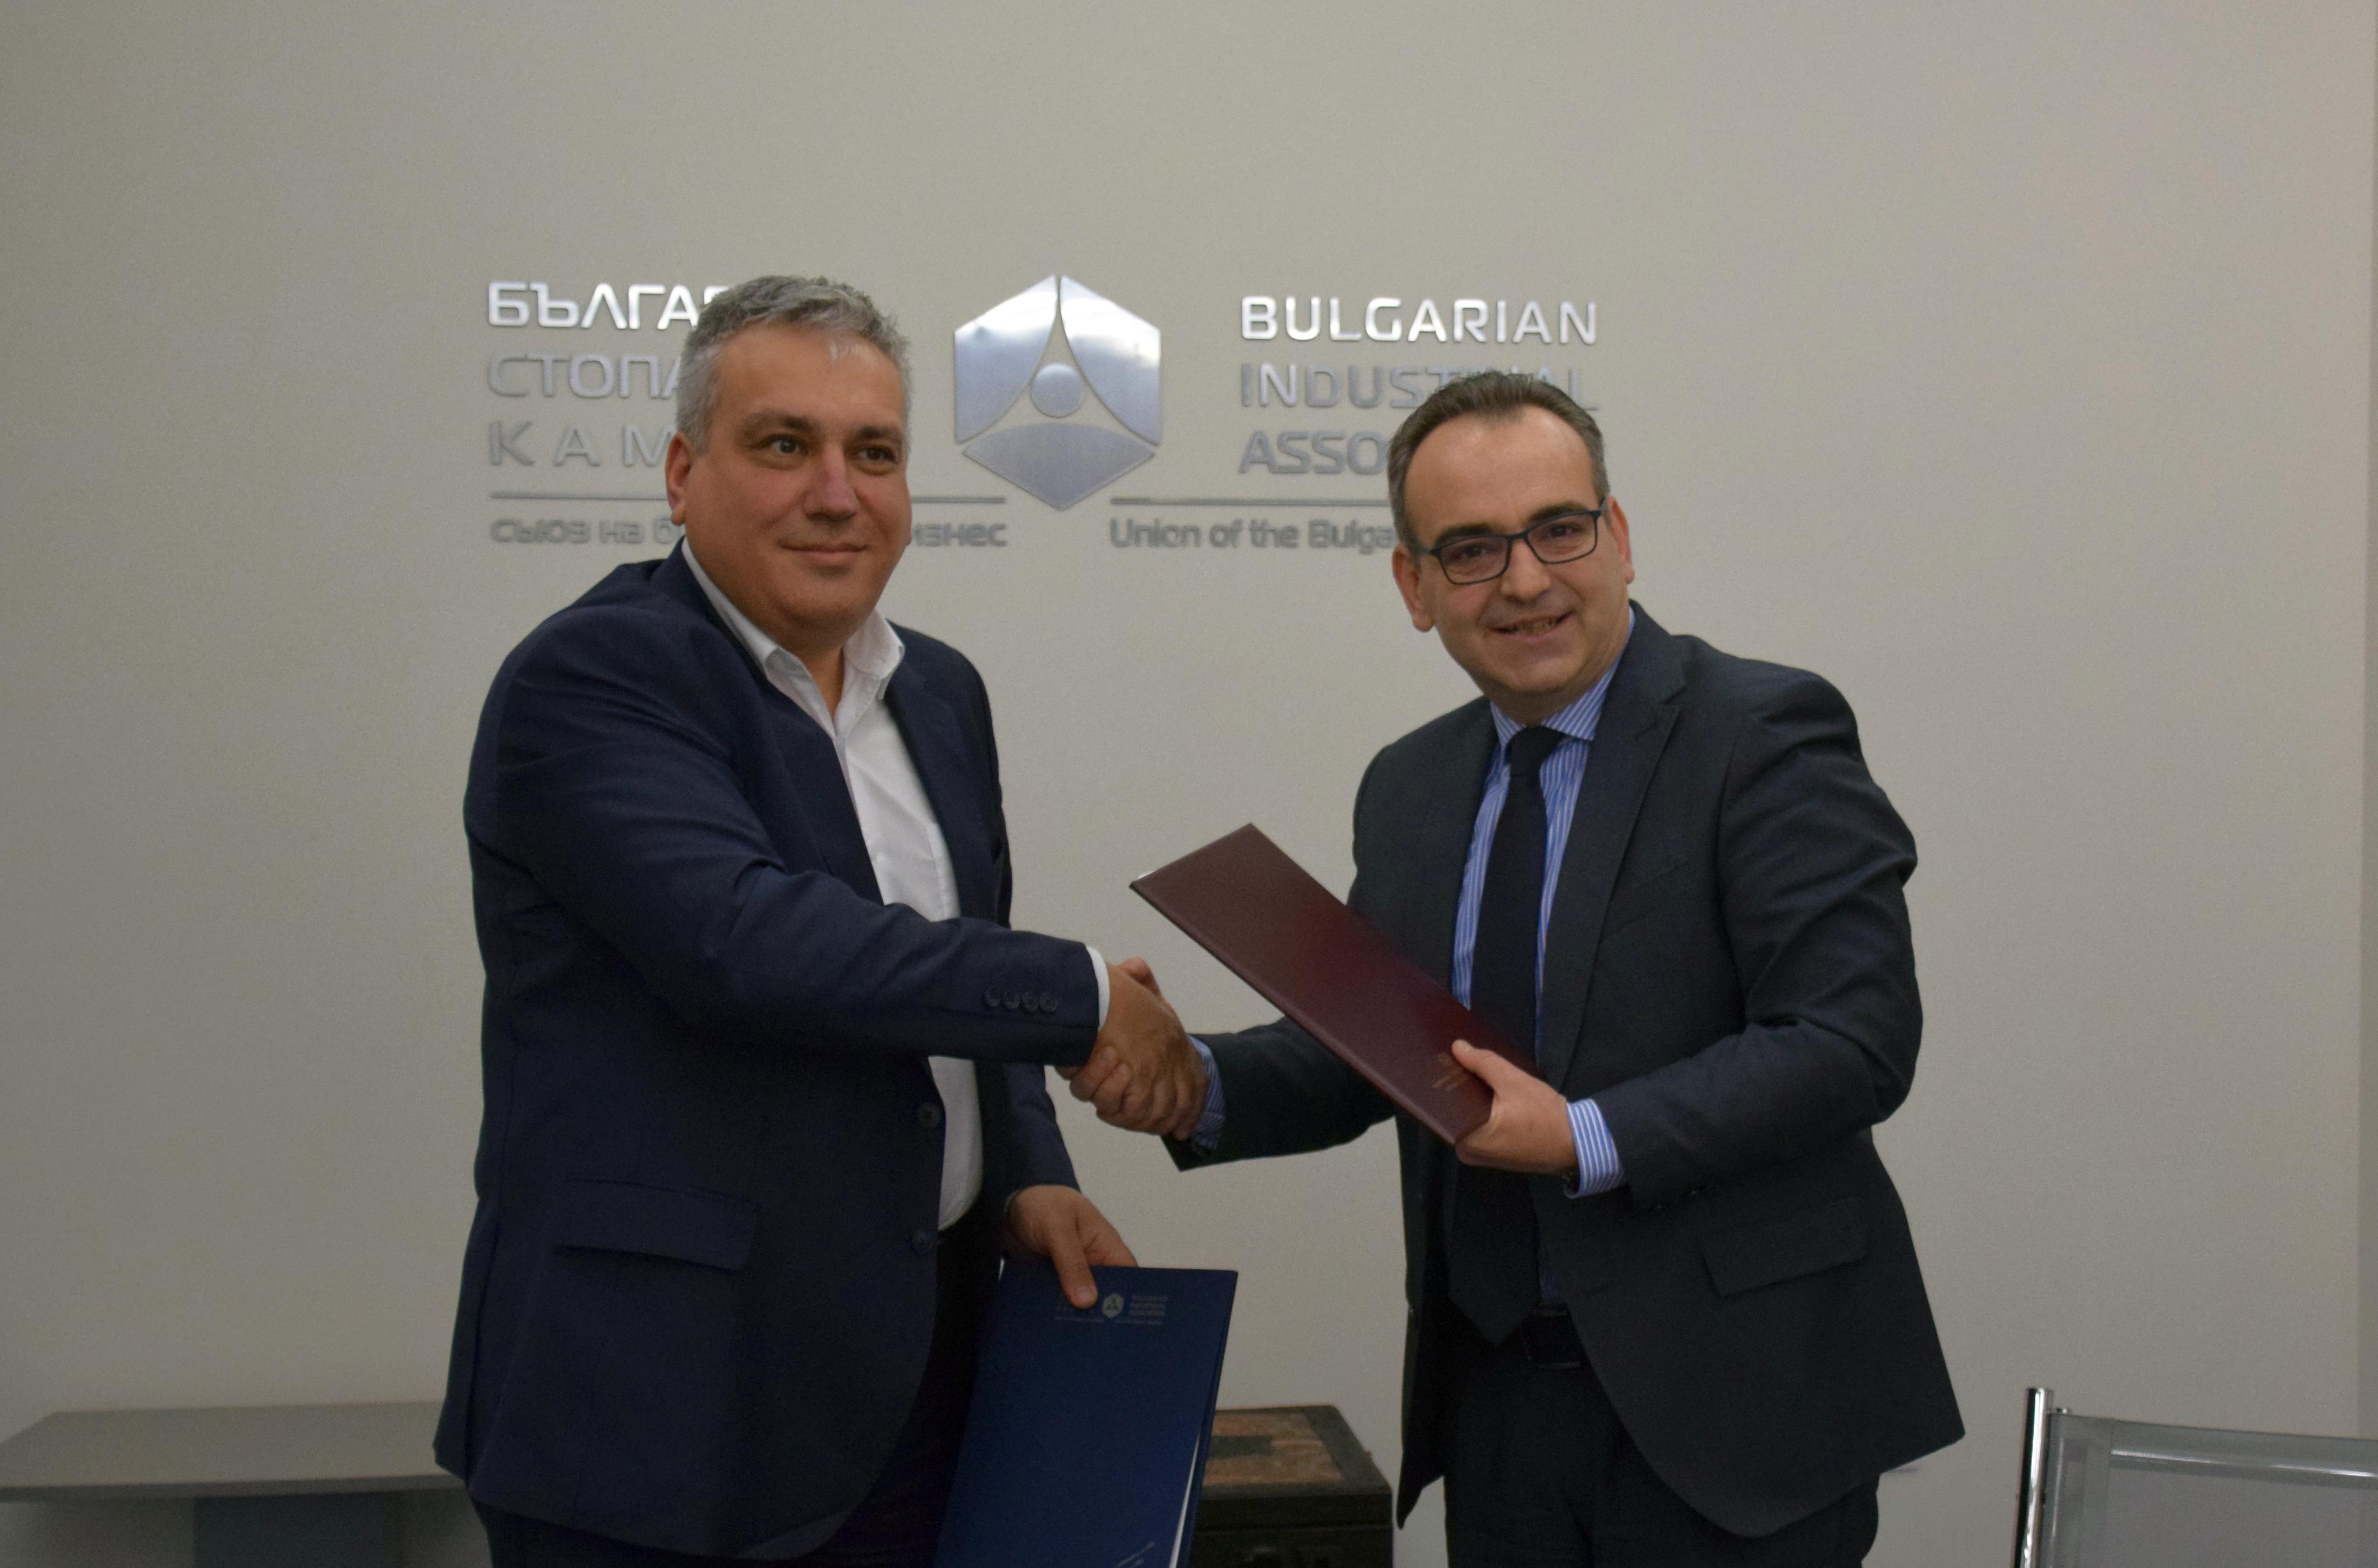 NSI and BIA signed a Memorandum of Cooperation